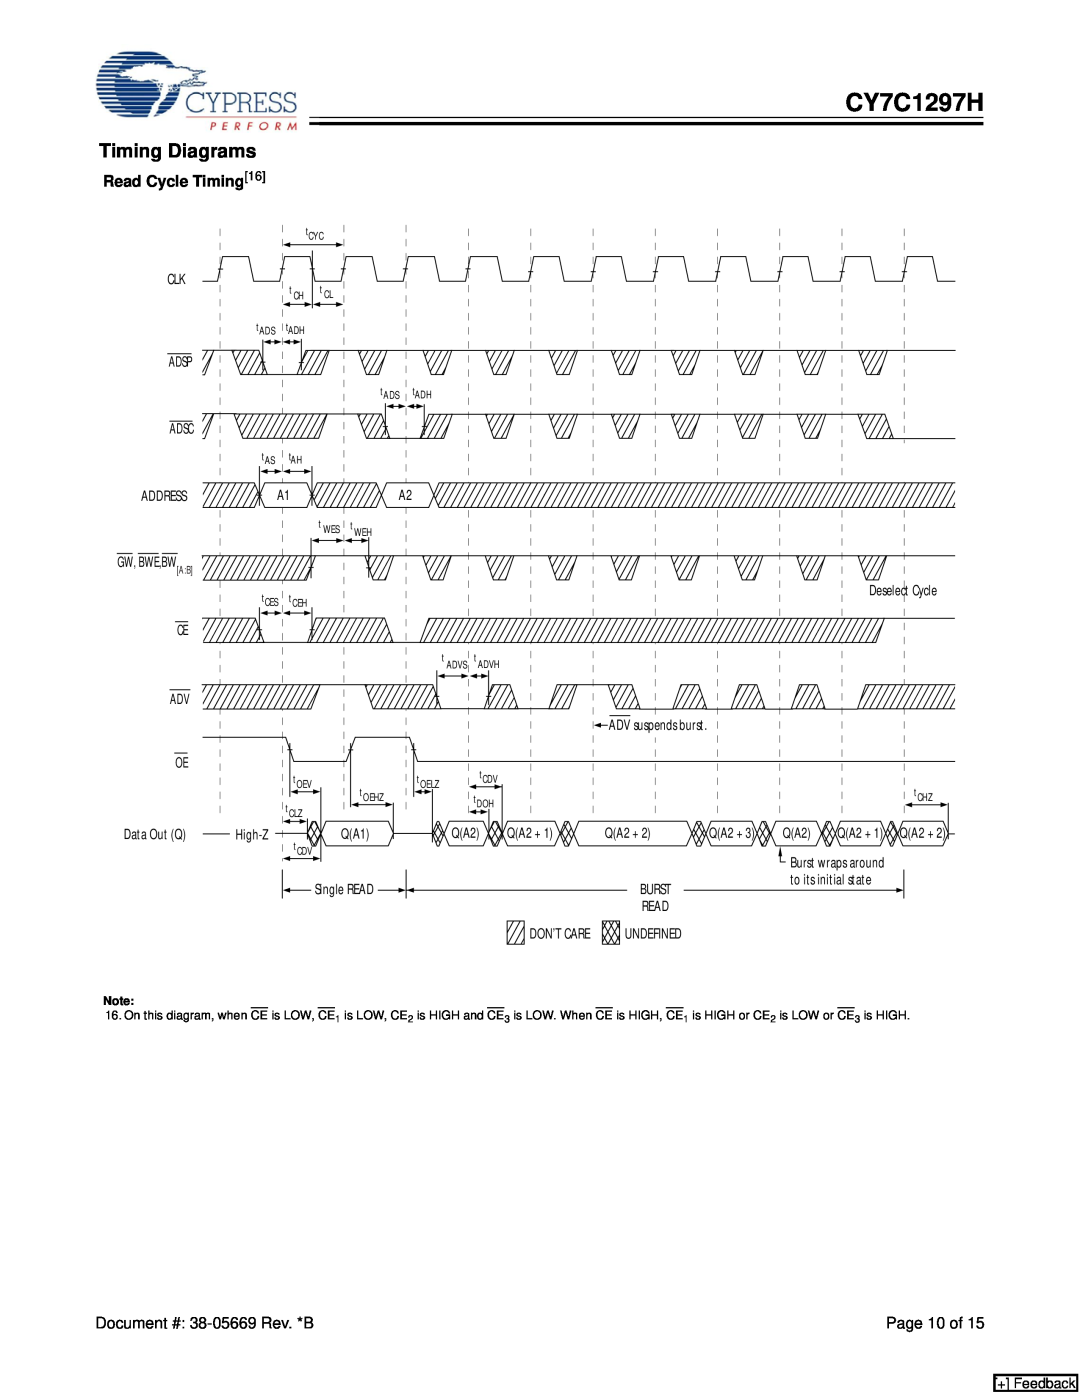 Cypress CY7C1297H manual Timing Diagrams, Read Cycle Timing16, + Feedback 